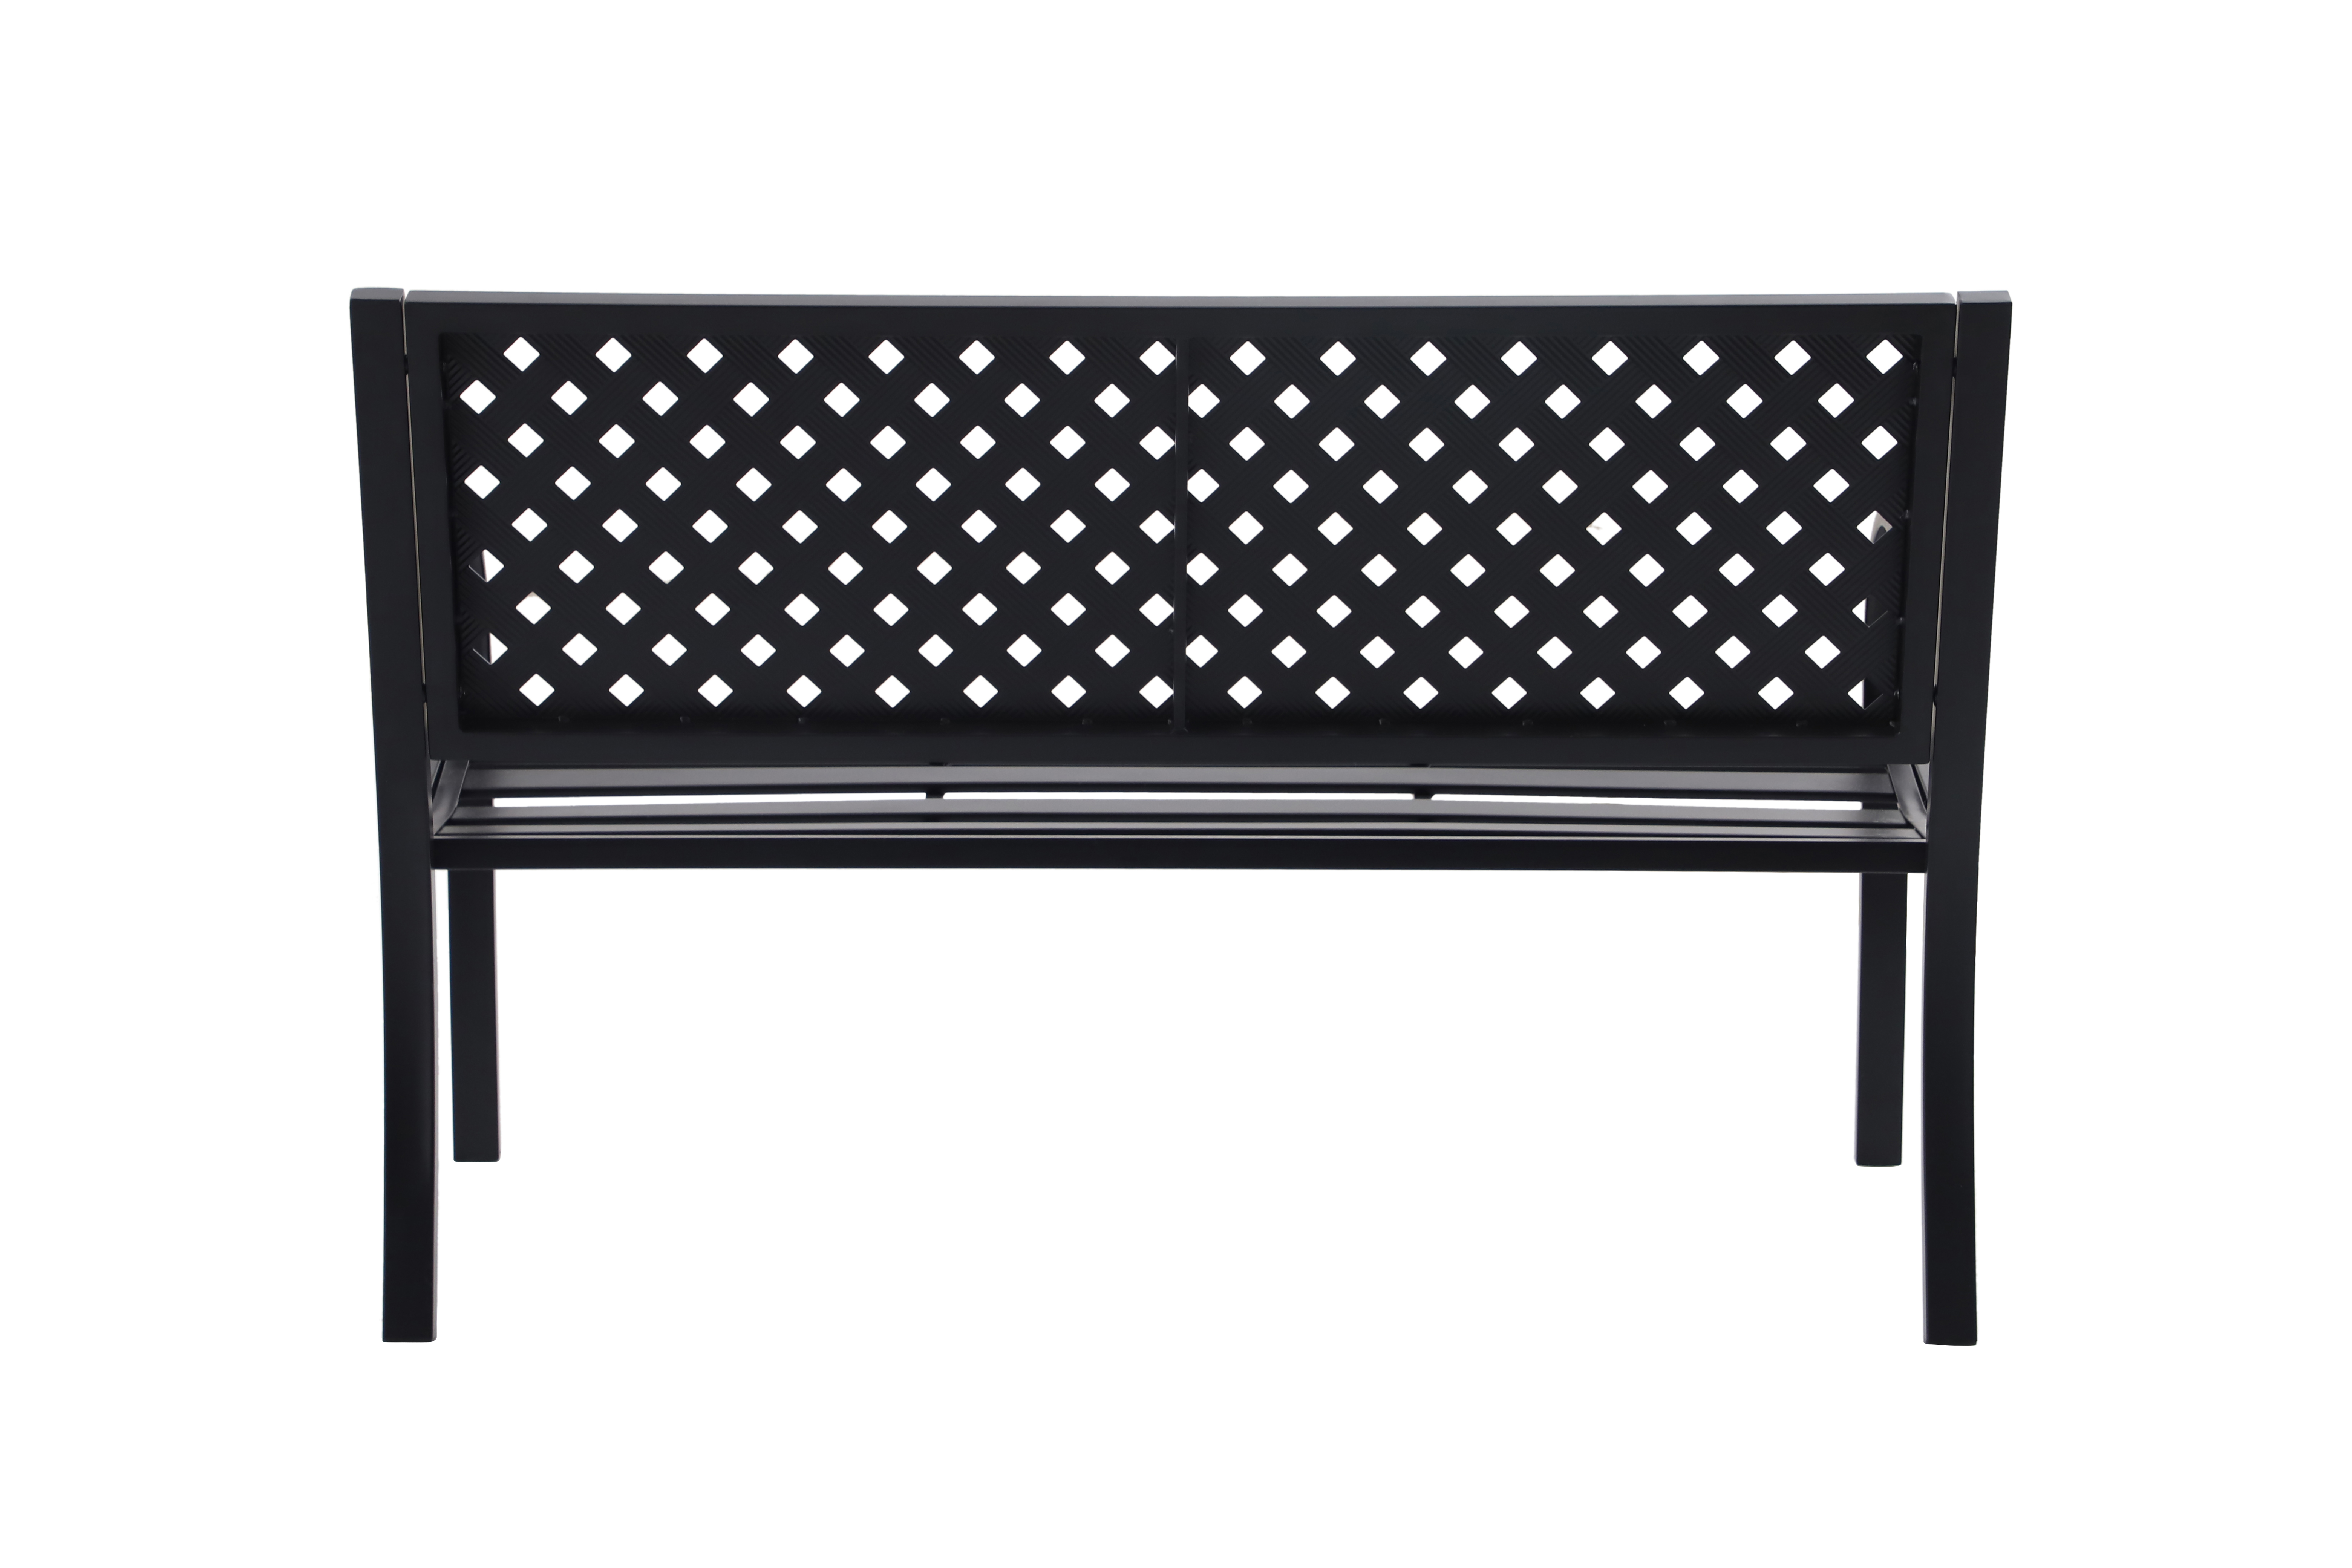 Mainstays Lattice High Back Slat Seat Steel Garden Bench, Black - image 7 of 12